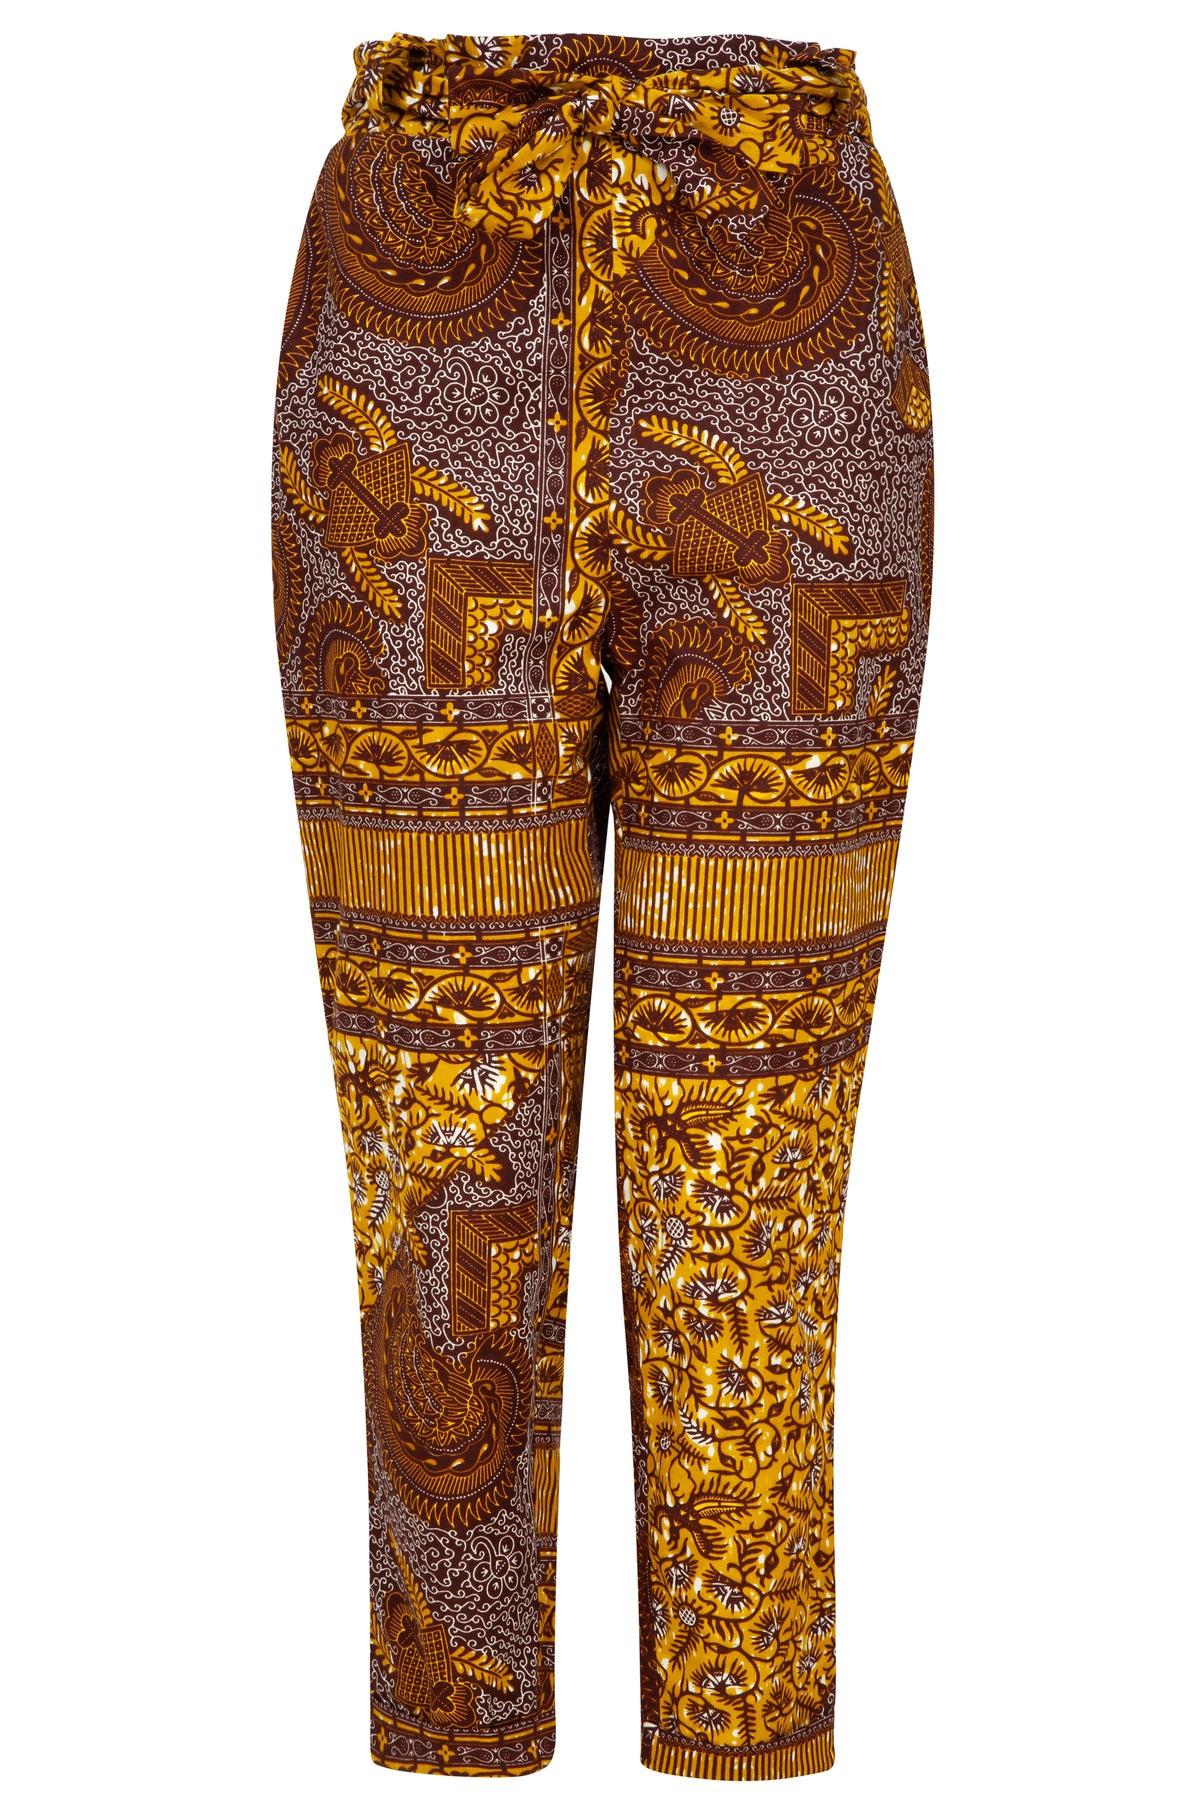 Women's African print trousers Ohema Ohene